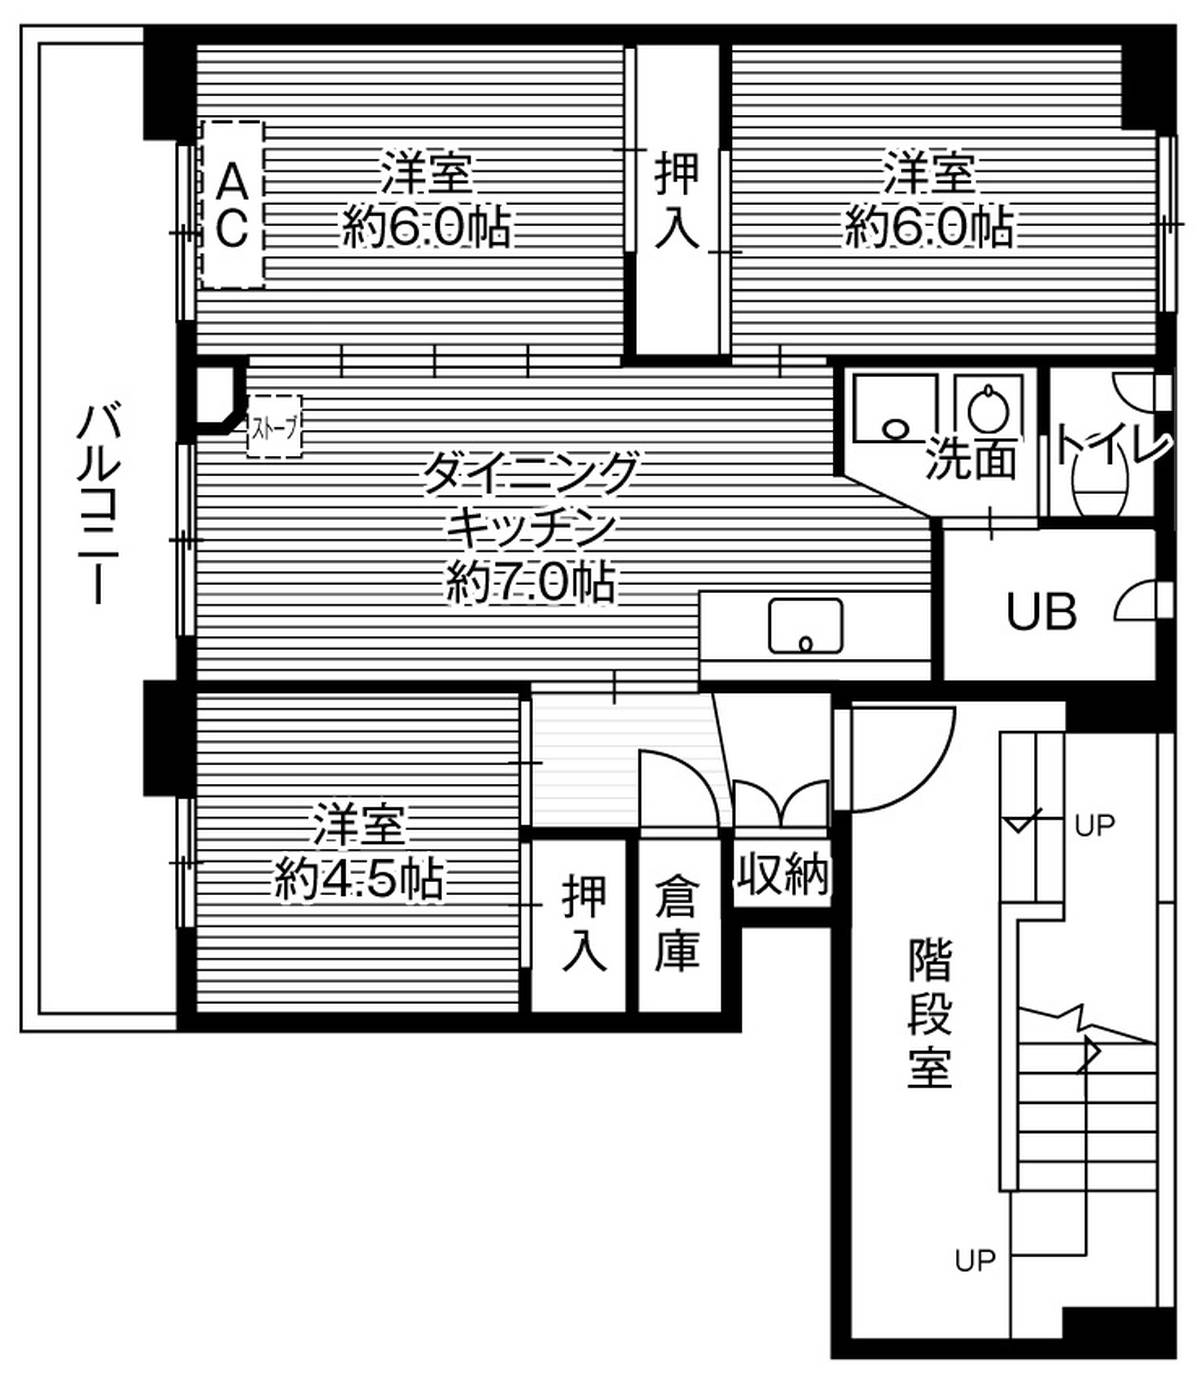 3DK floorplan of Village House Shizunai in Hidaka-gun